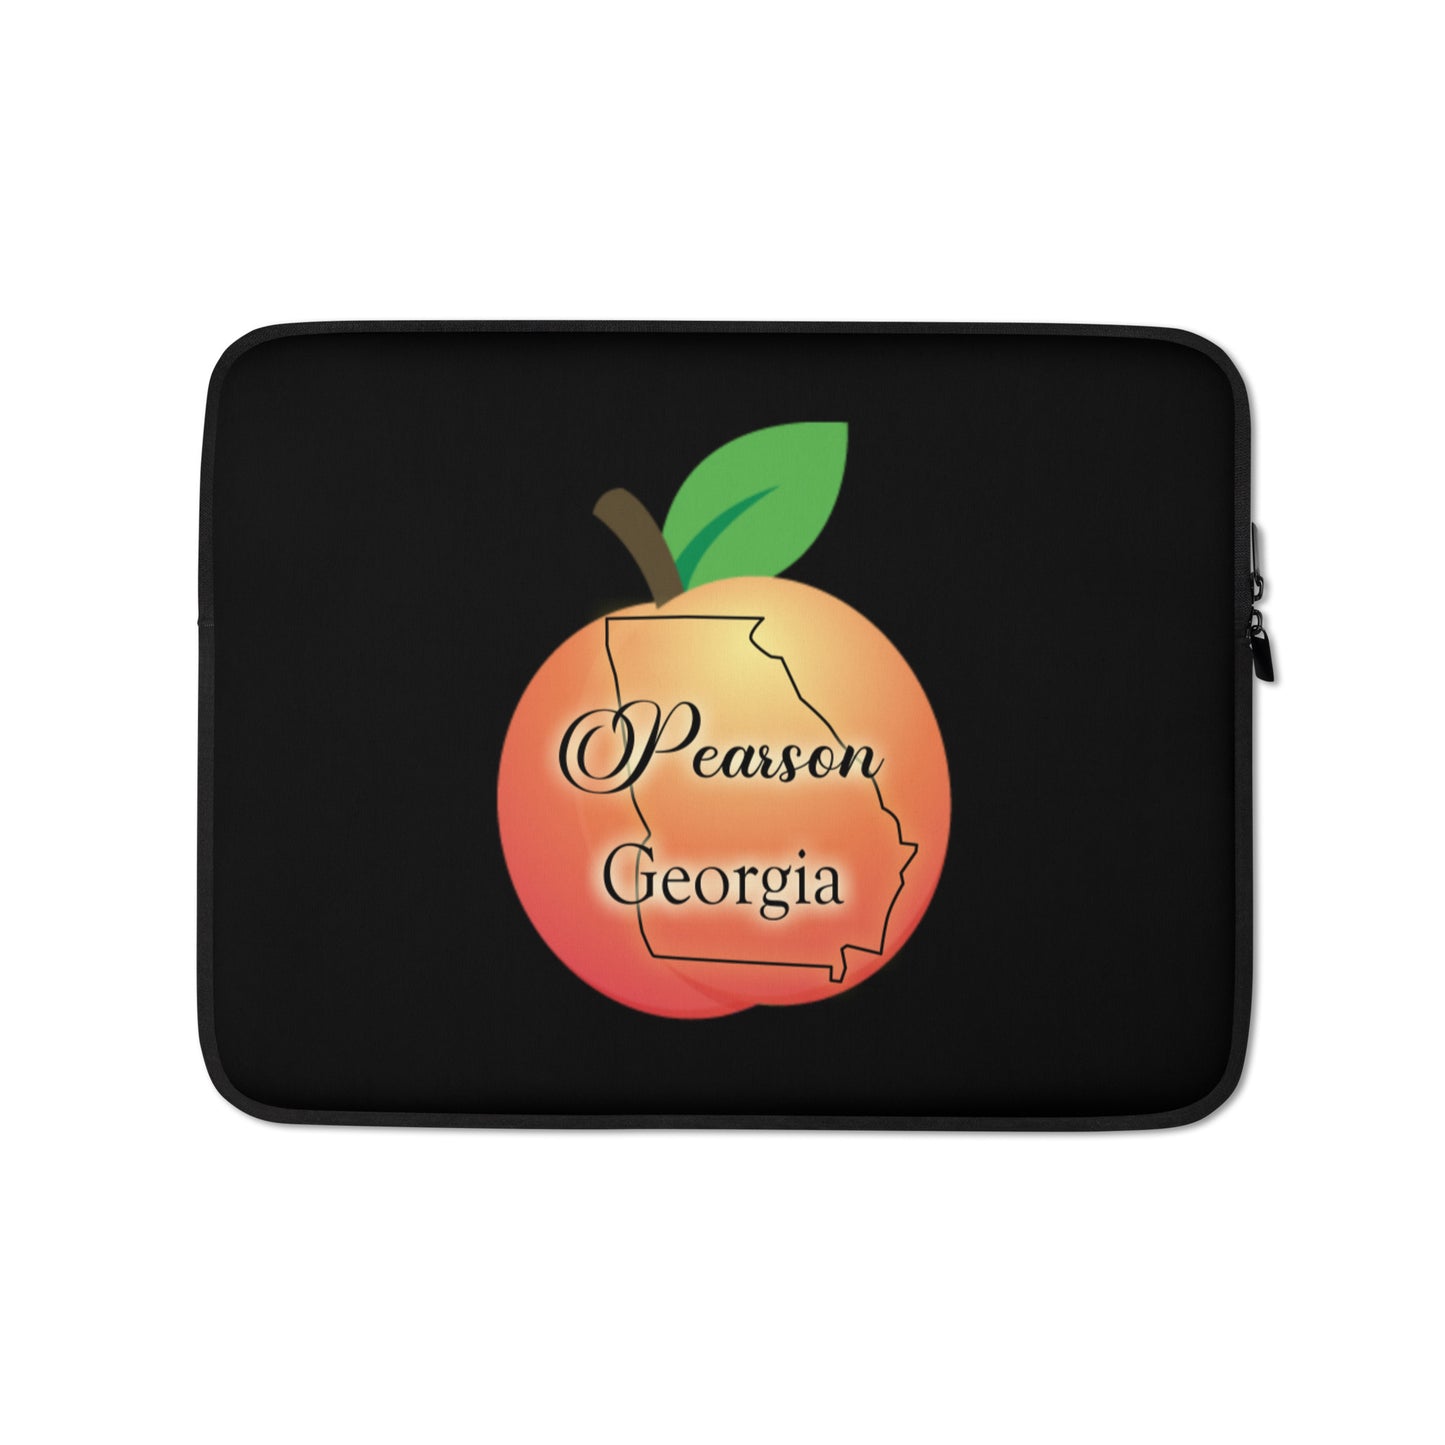 Pearson Georgia Laptop Sleeve